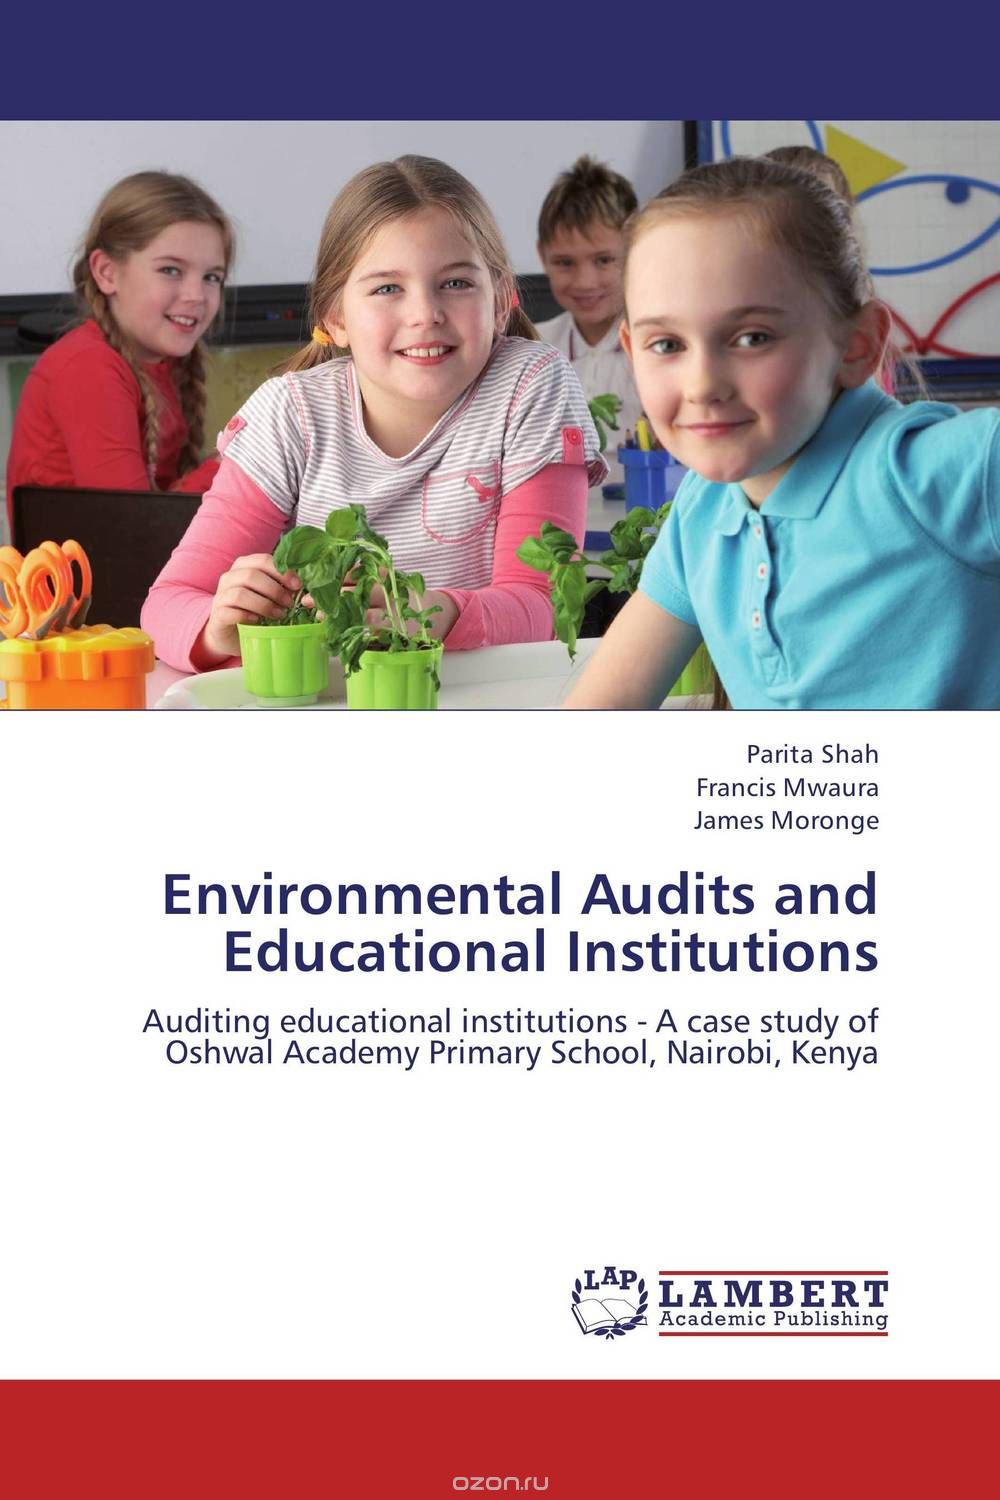 Скачать книгу "Environmental Audits and Educational Institutions"